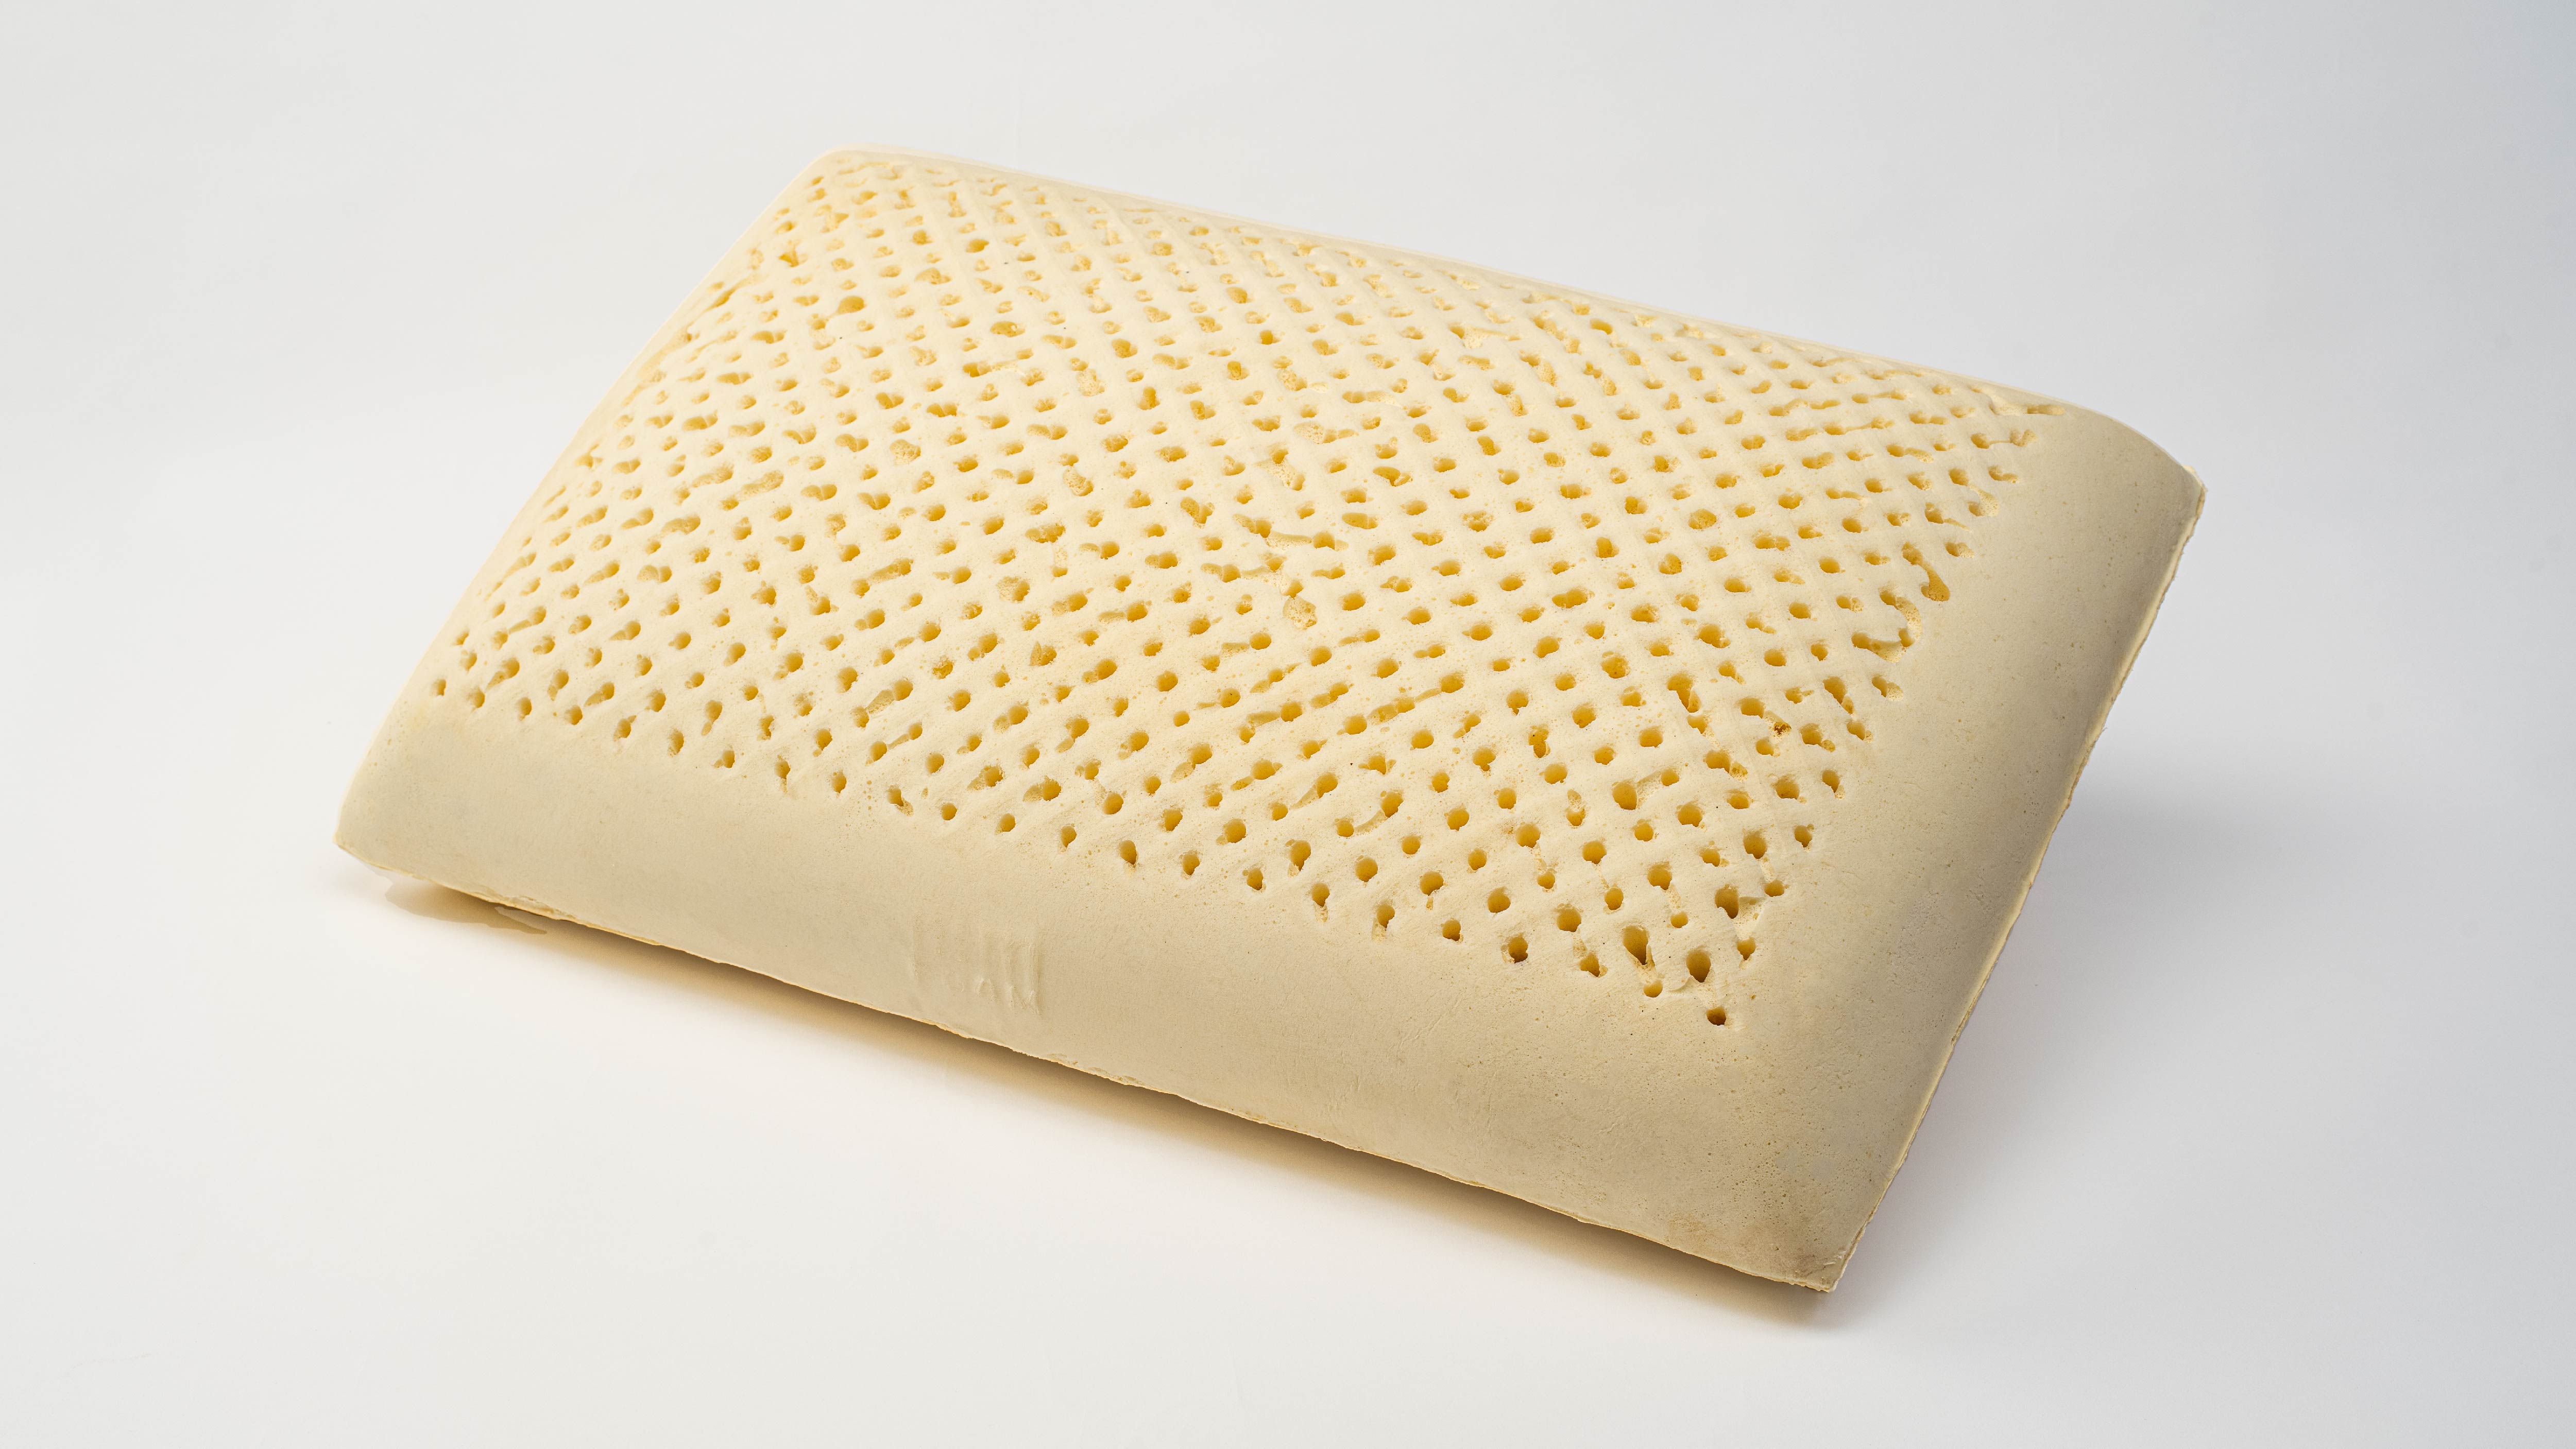 DMI Hypoallergenic Natural Pincore Latex Foam Comfort Seat Cushion